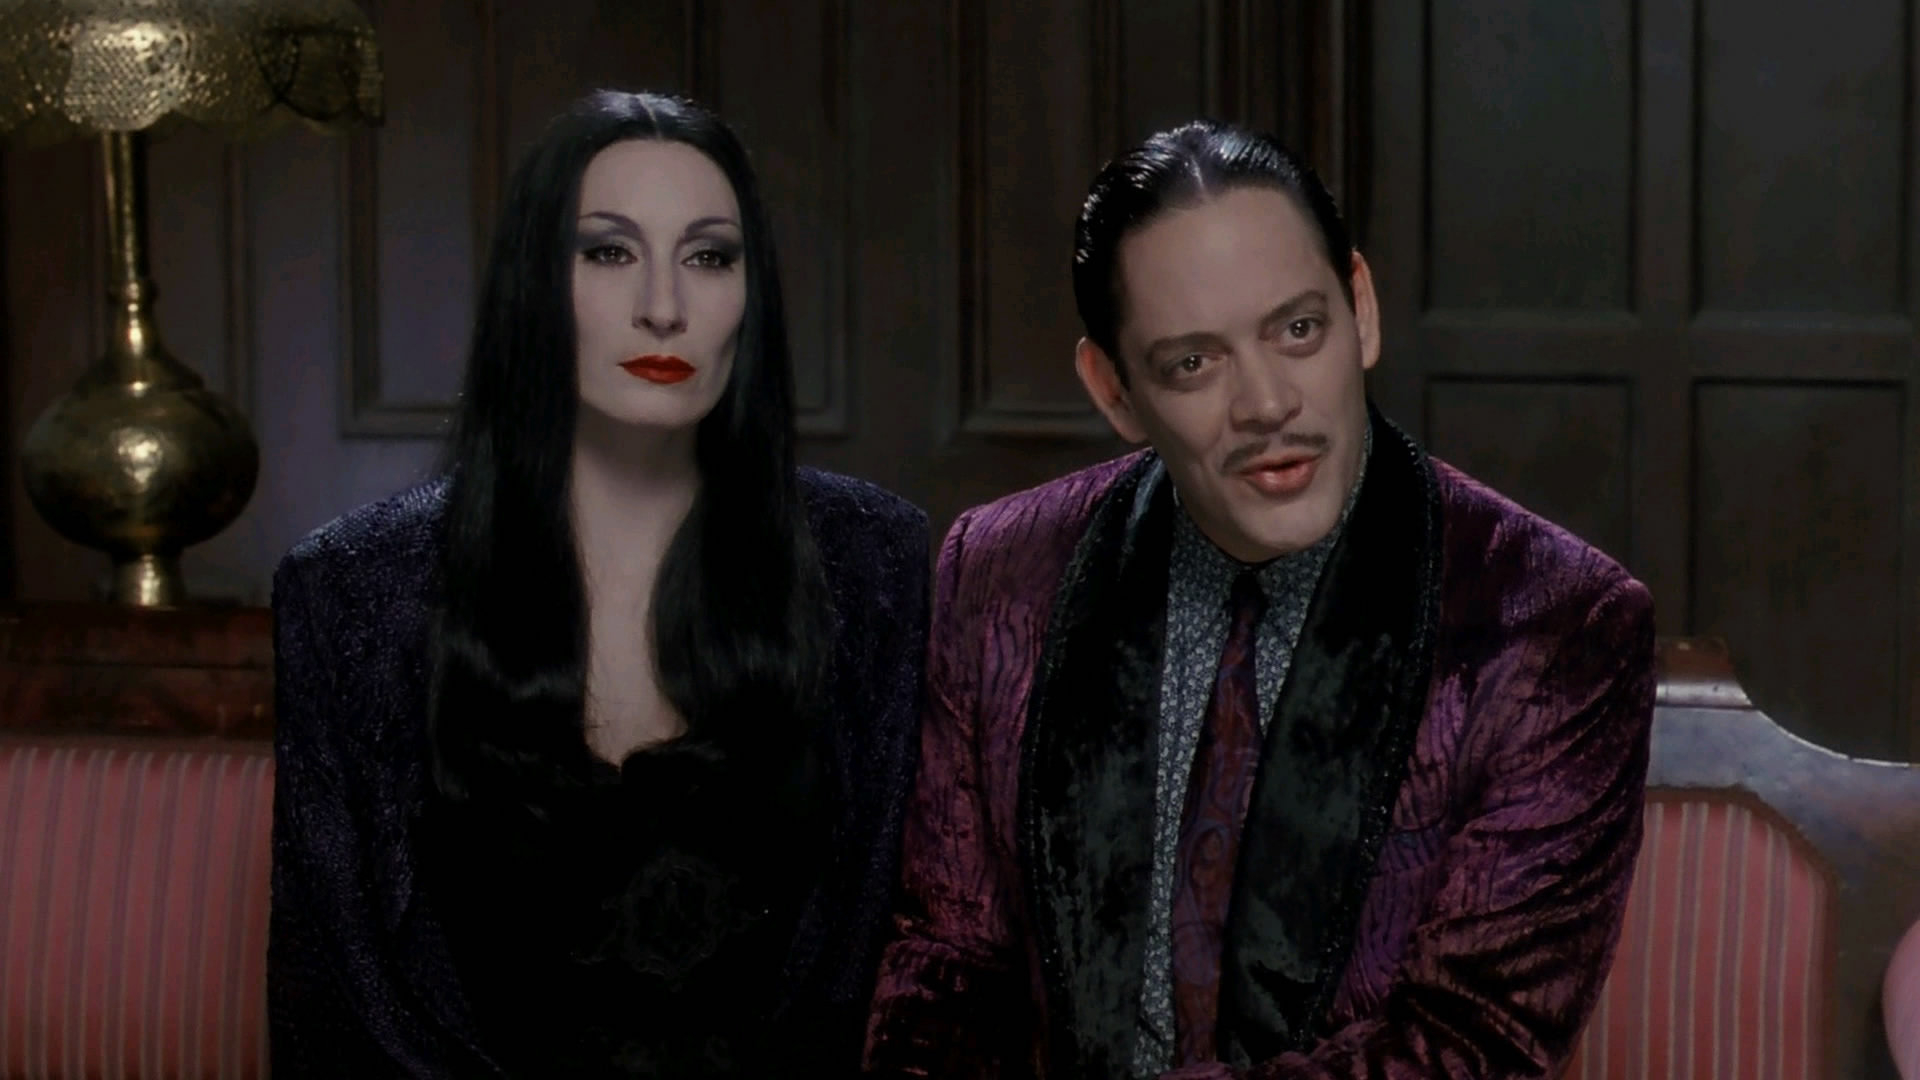 Anjelica Huston and Raul Julia in The Addams Family.